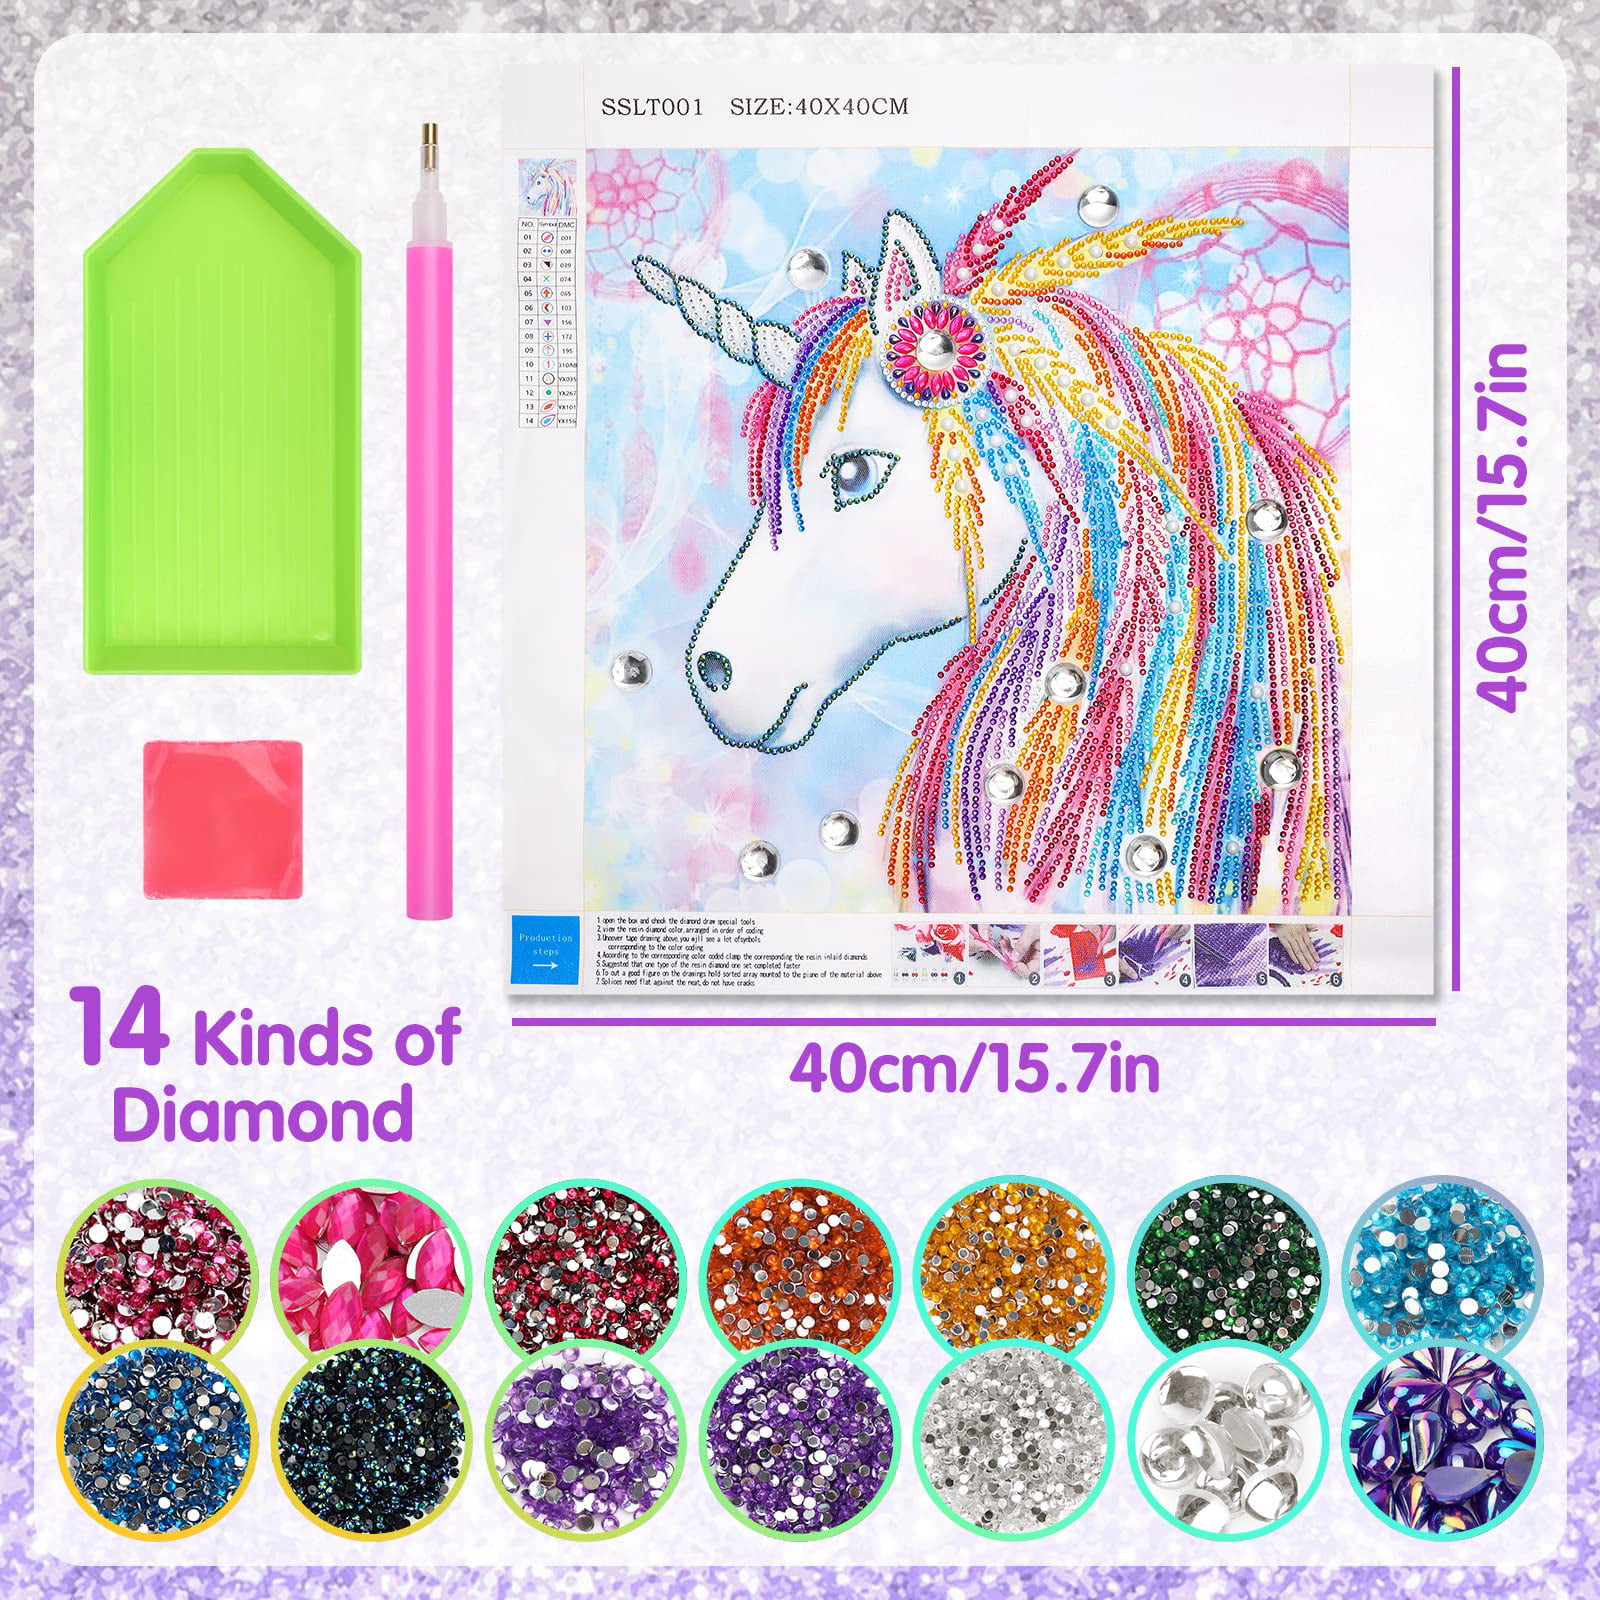  Yazhiji 6 Sheets Diamond Window Art Craft Kits for Kids,  Suncatcher Kit for Ages 6 7 8 9 10 Flower Sun Dolphin DIY Painting Kit for  Girls or Boys Ages 6+